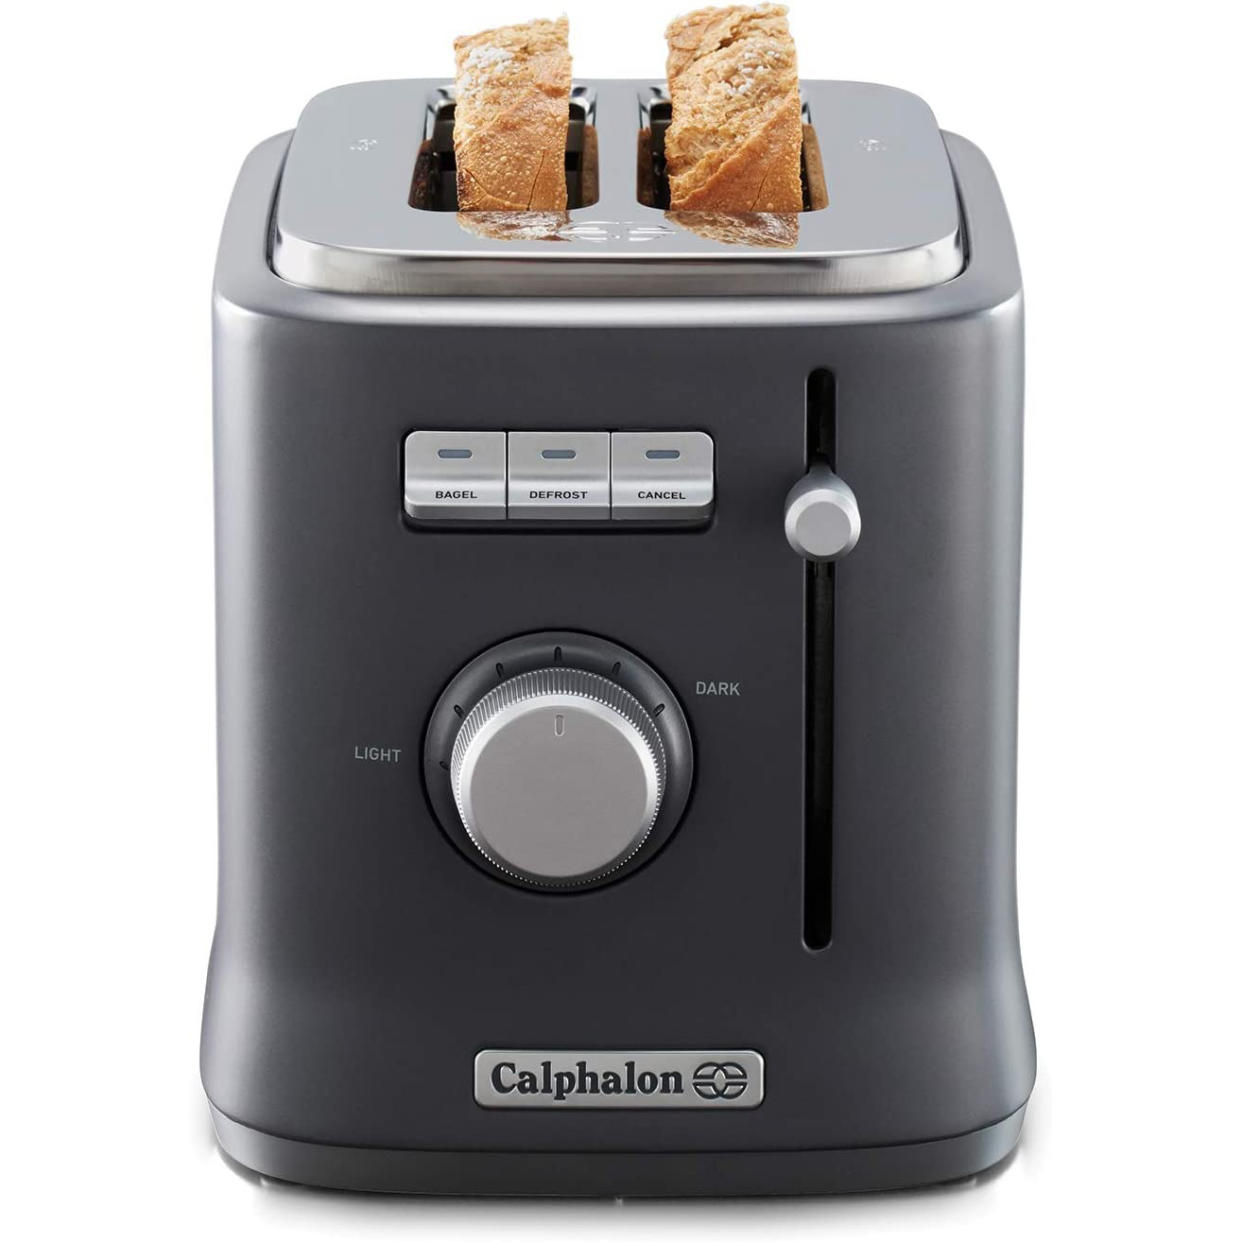 Calphalon toaster, prime day kitchen deals